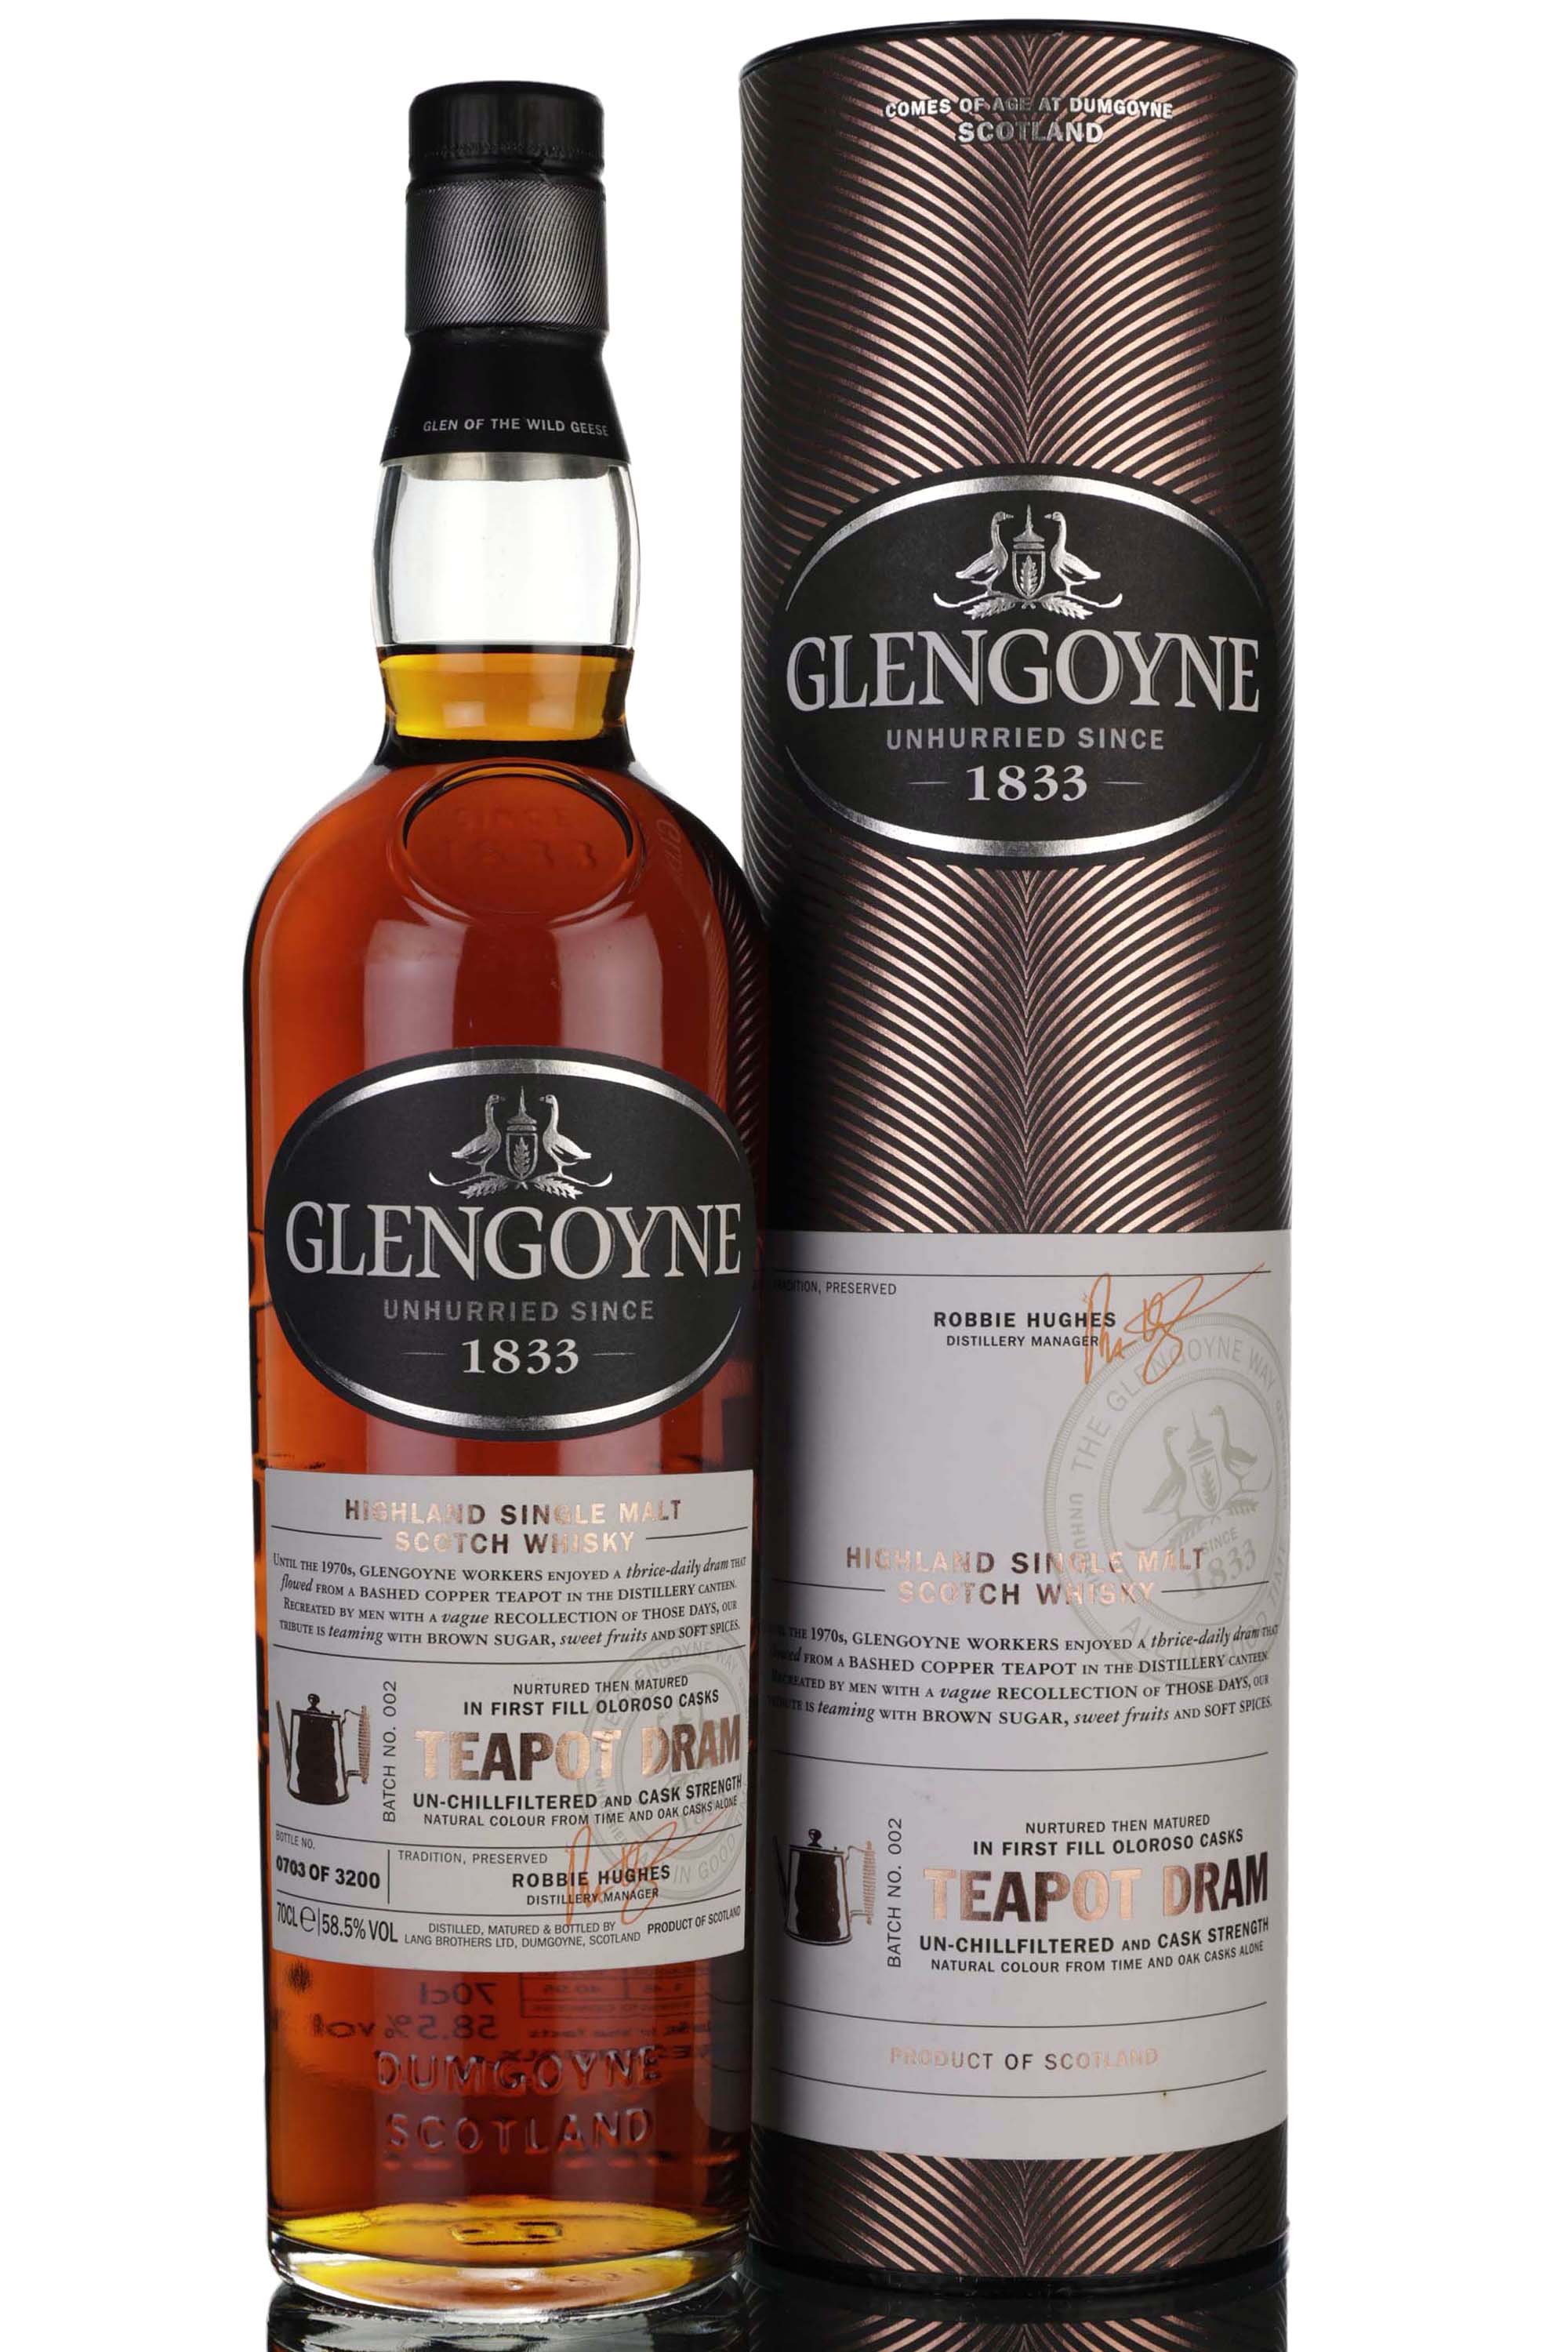 Glengoyne The Teapot Dram - Distillery Exclusive - Batch 2 - 2013 Release